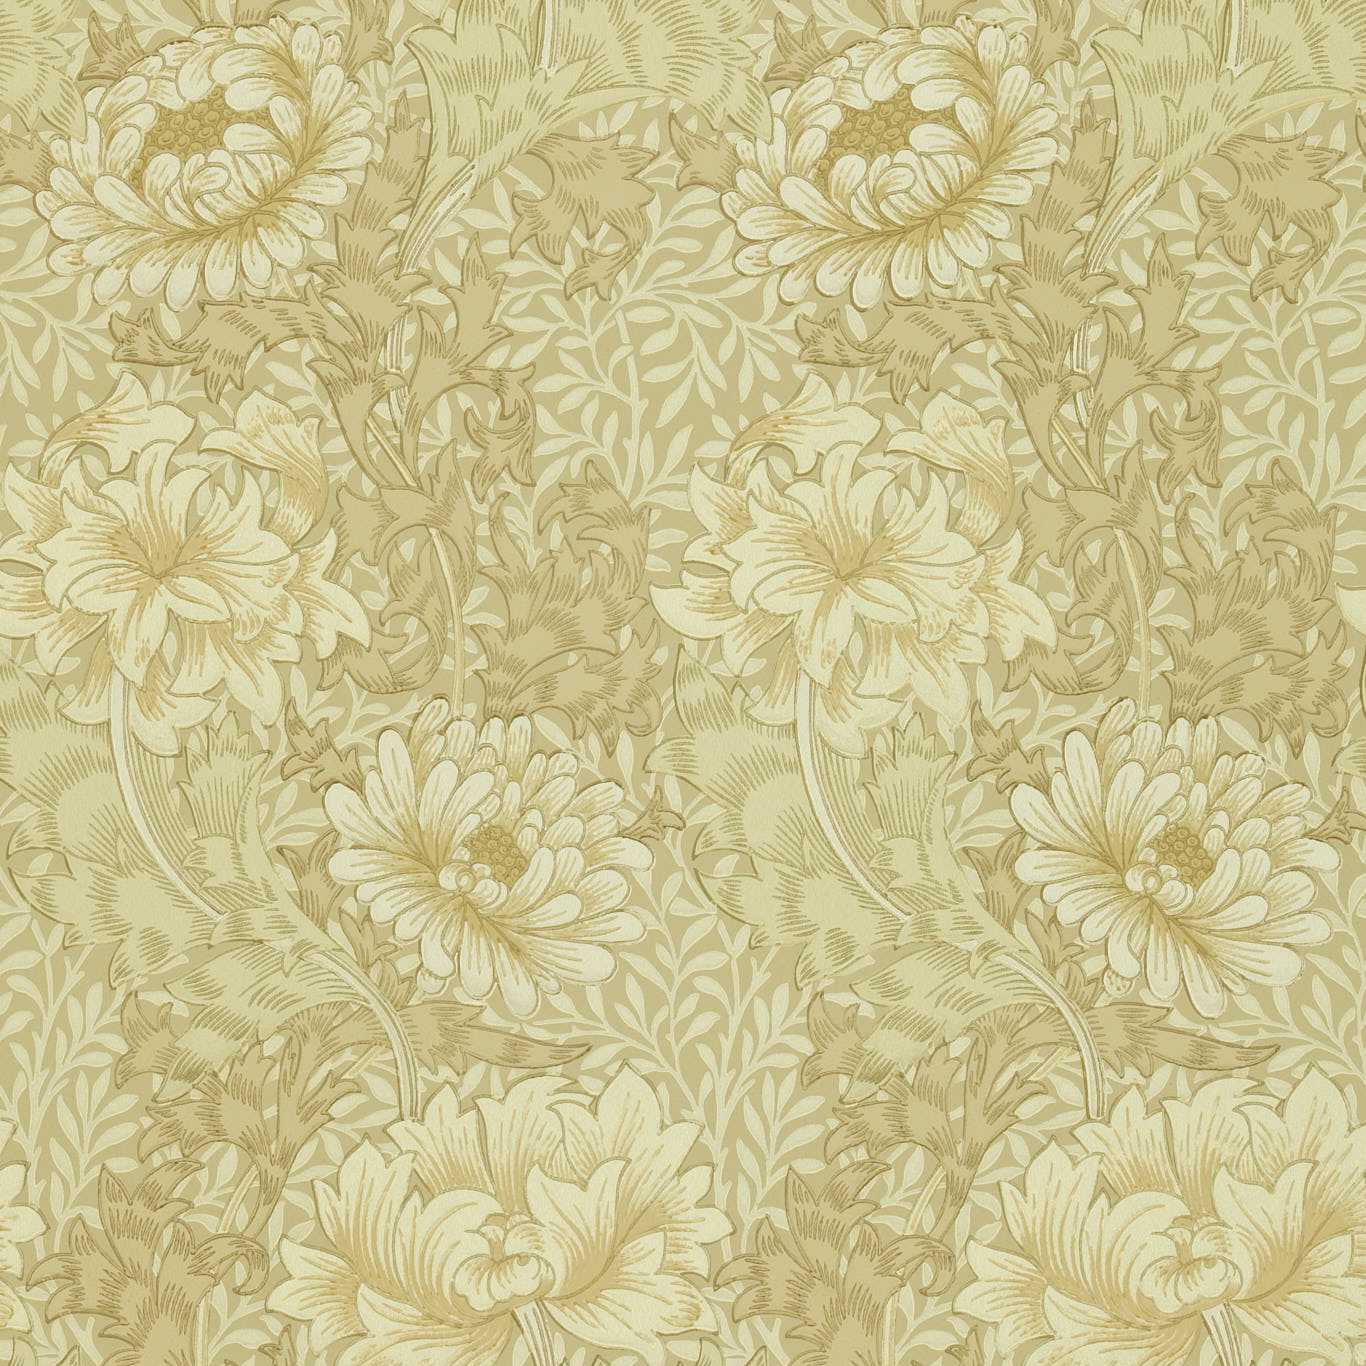 Chrysanthemum Ivory/Canvas Wallpaper DMCW210419 by Morris & Co